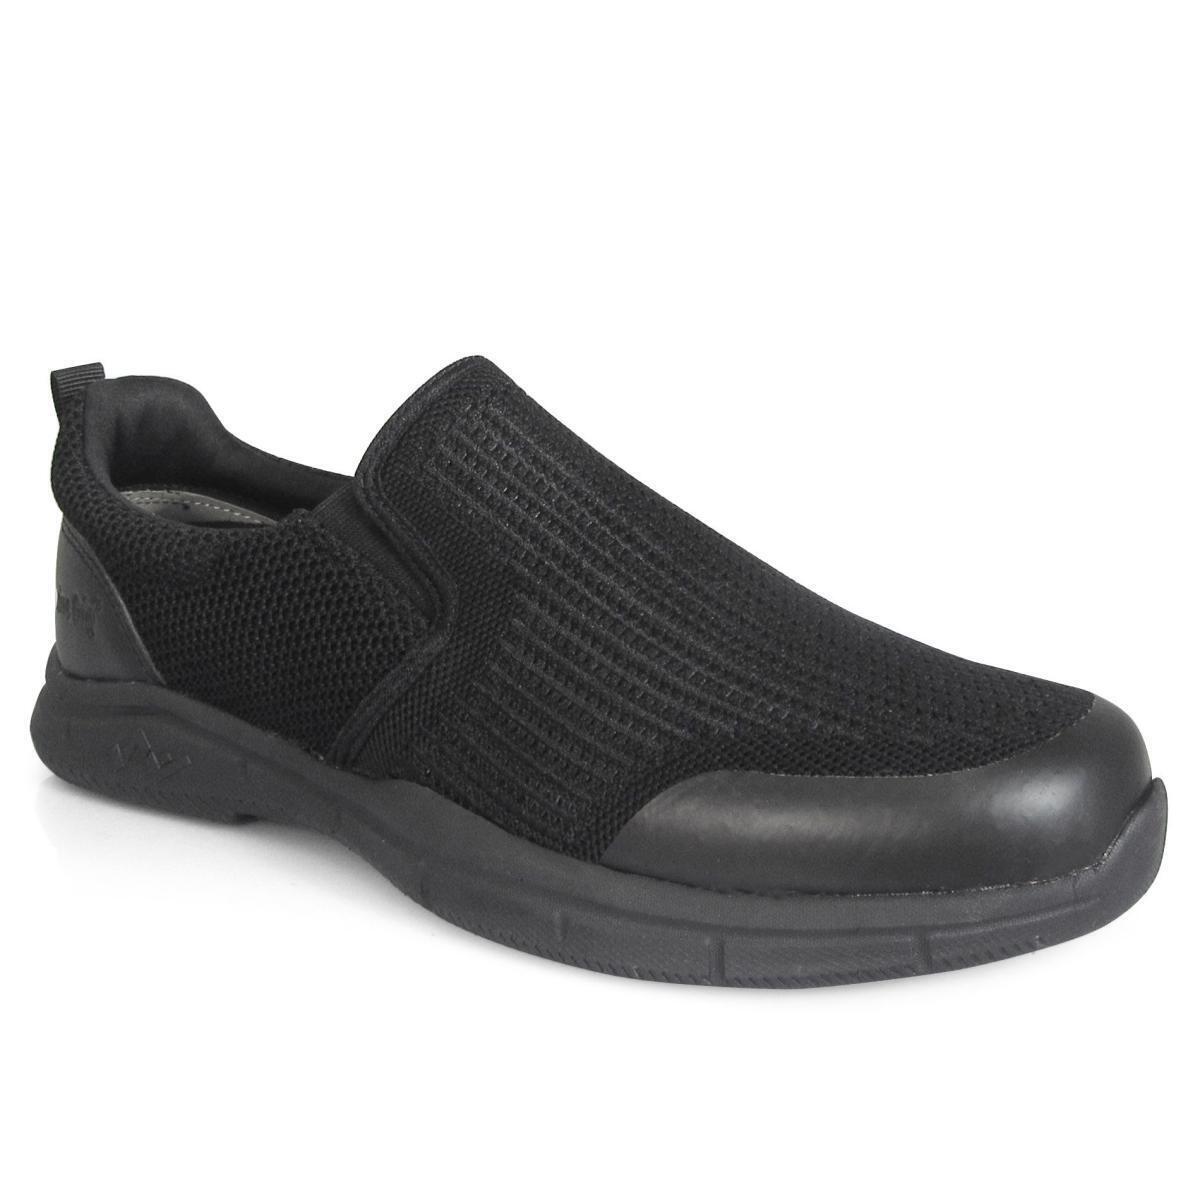 Genuine Grip 1700-10.5M Men Slip-On Water Repellent Shoe, Black - Size 10.5 Medium